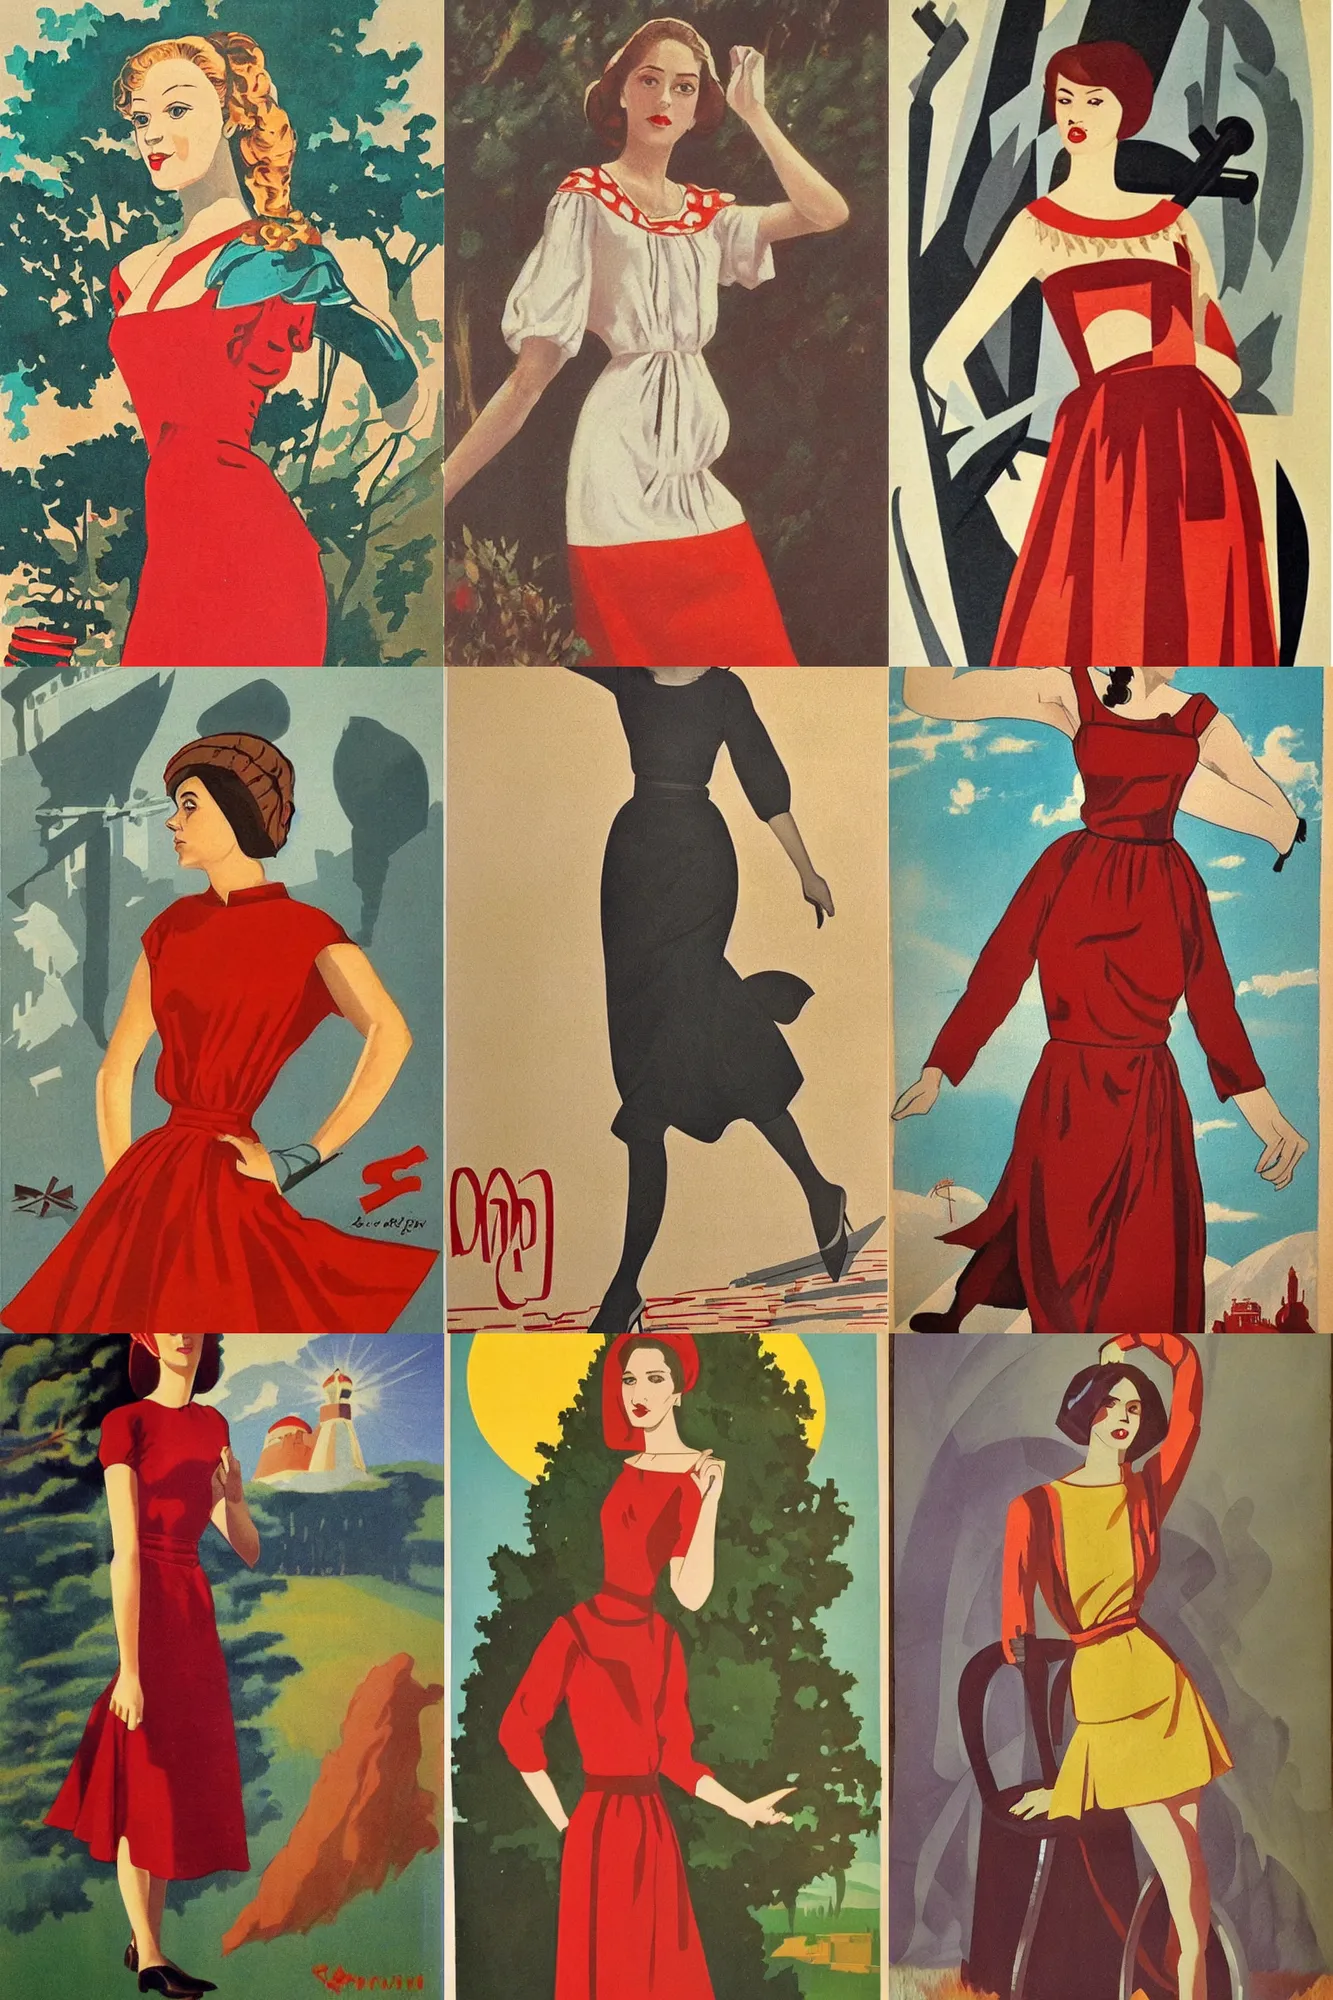 Prompt: beautiful slender young woman, elegant look, peasant dress, soviet propaganda art